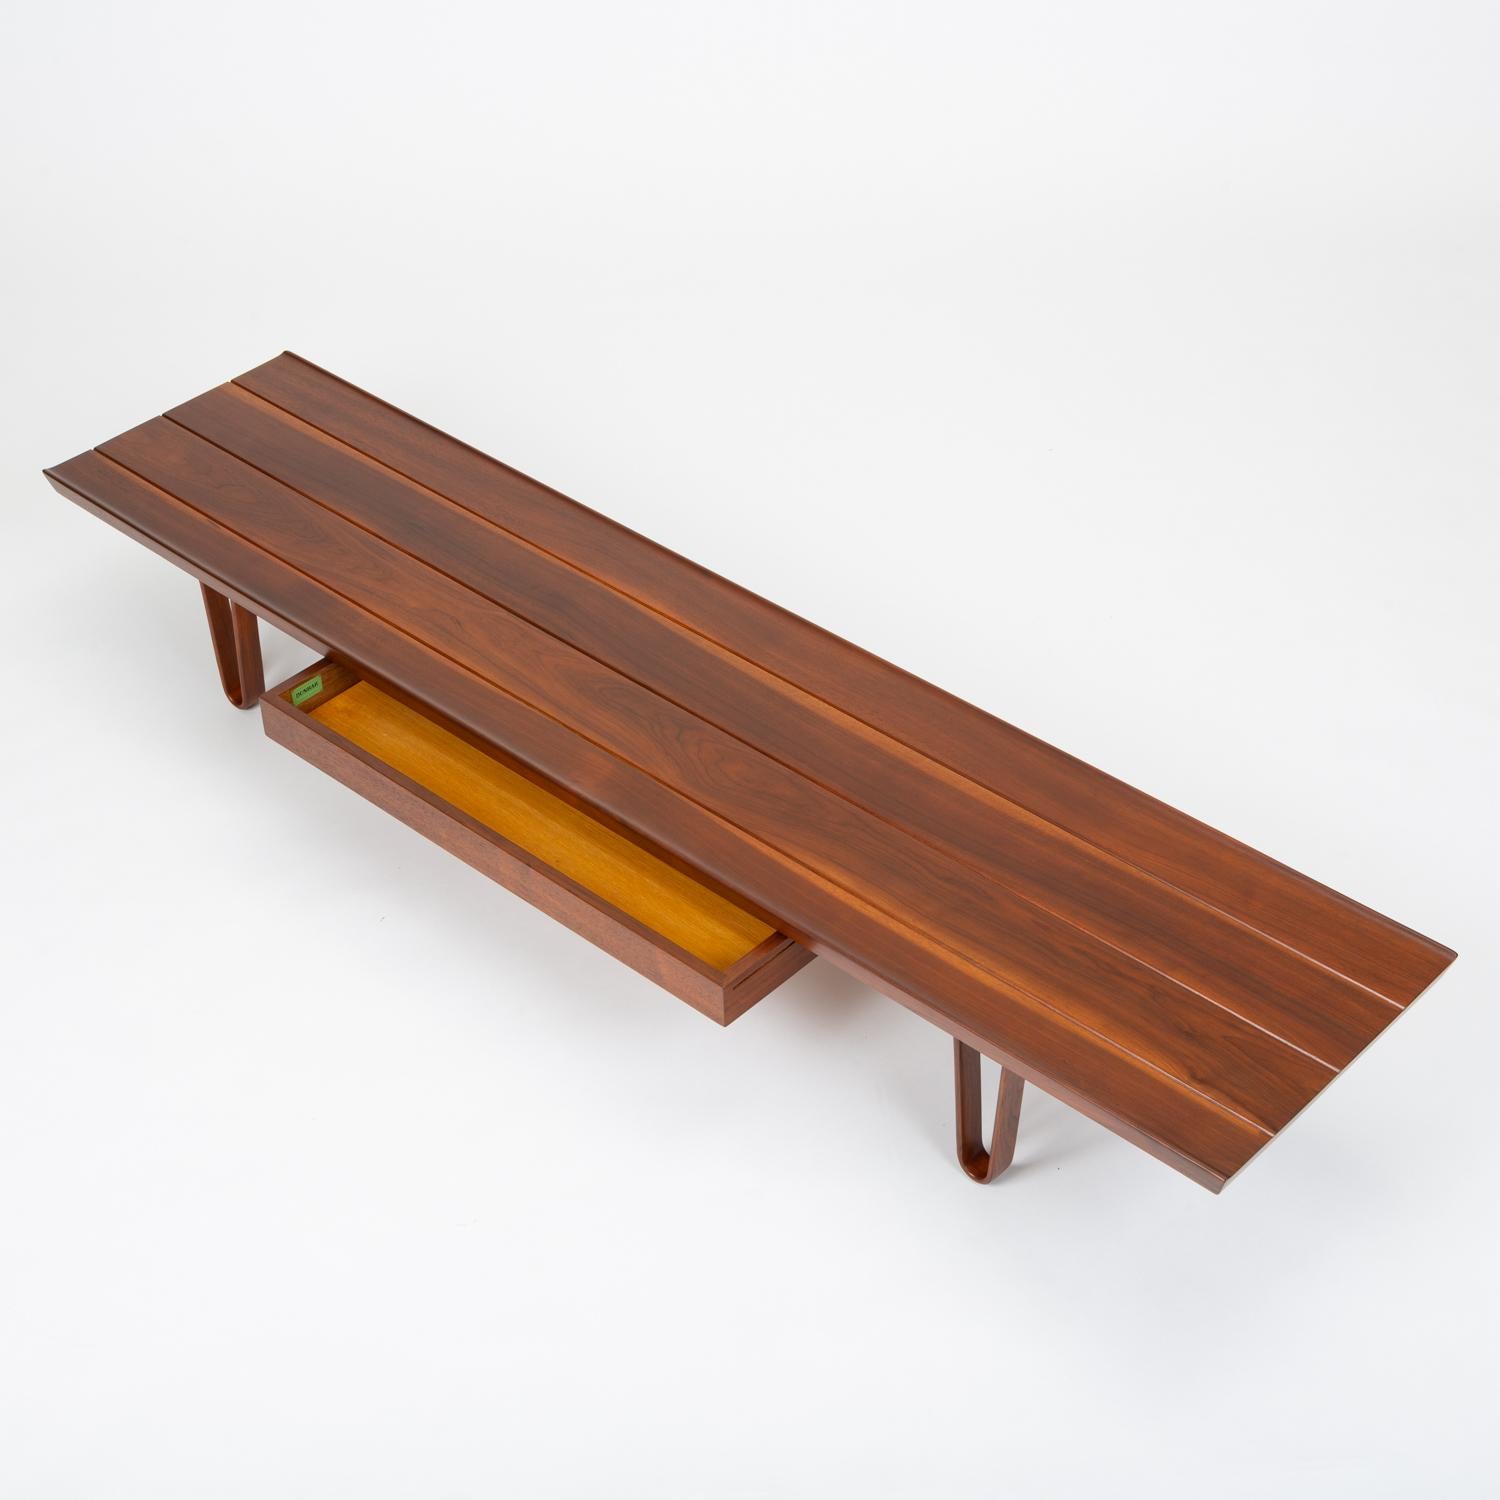 Mid-20th Century Walnut “Long John” Bench or Coffee Table by Edward Wormley for Dunbar